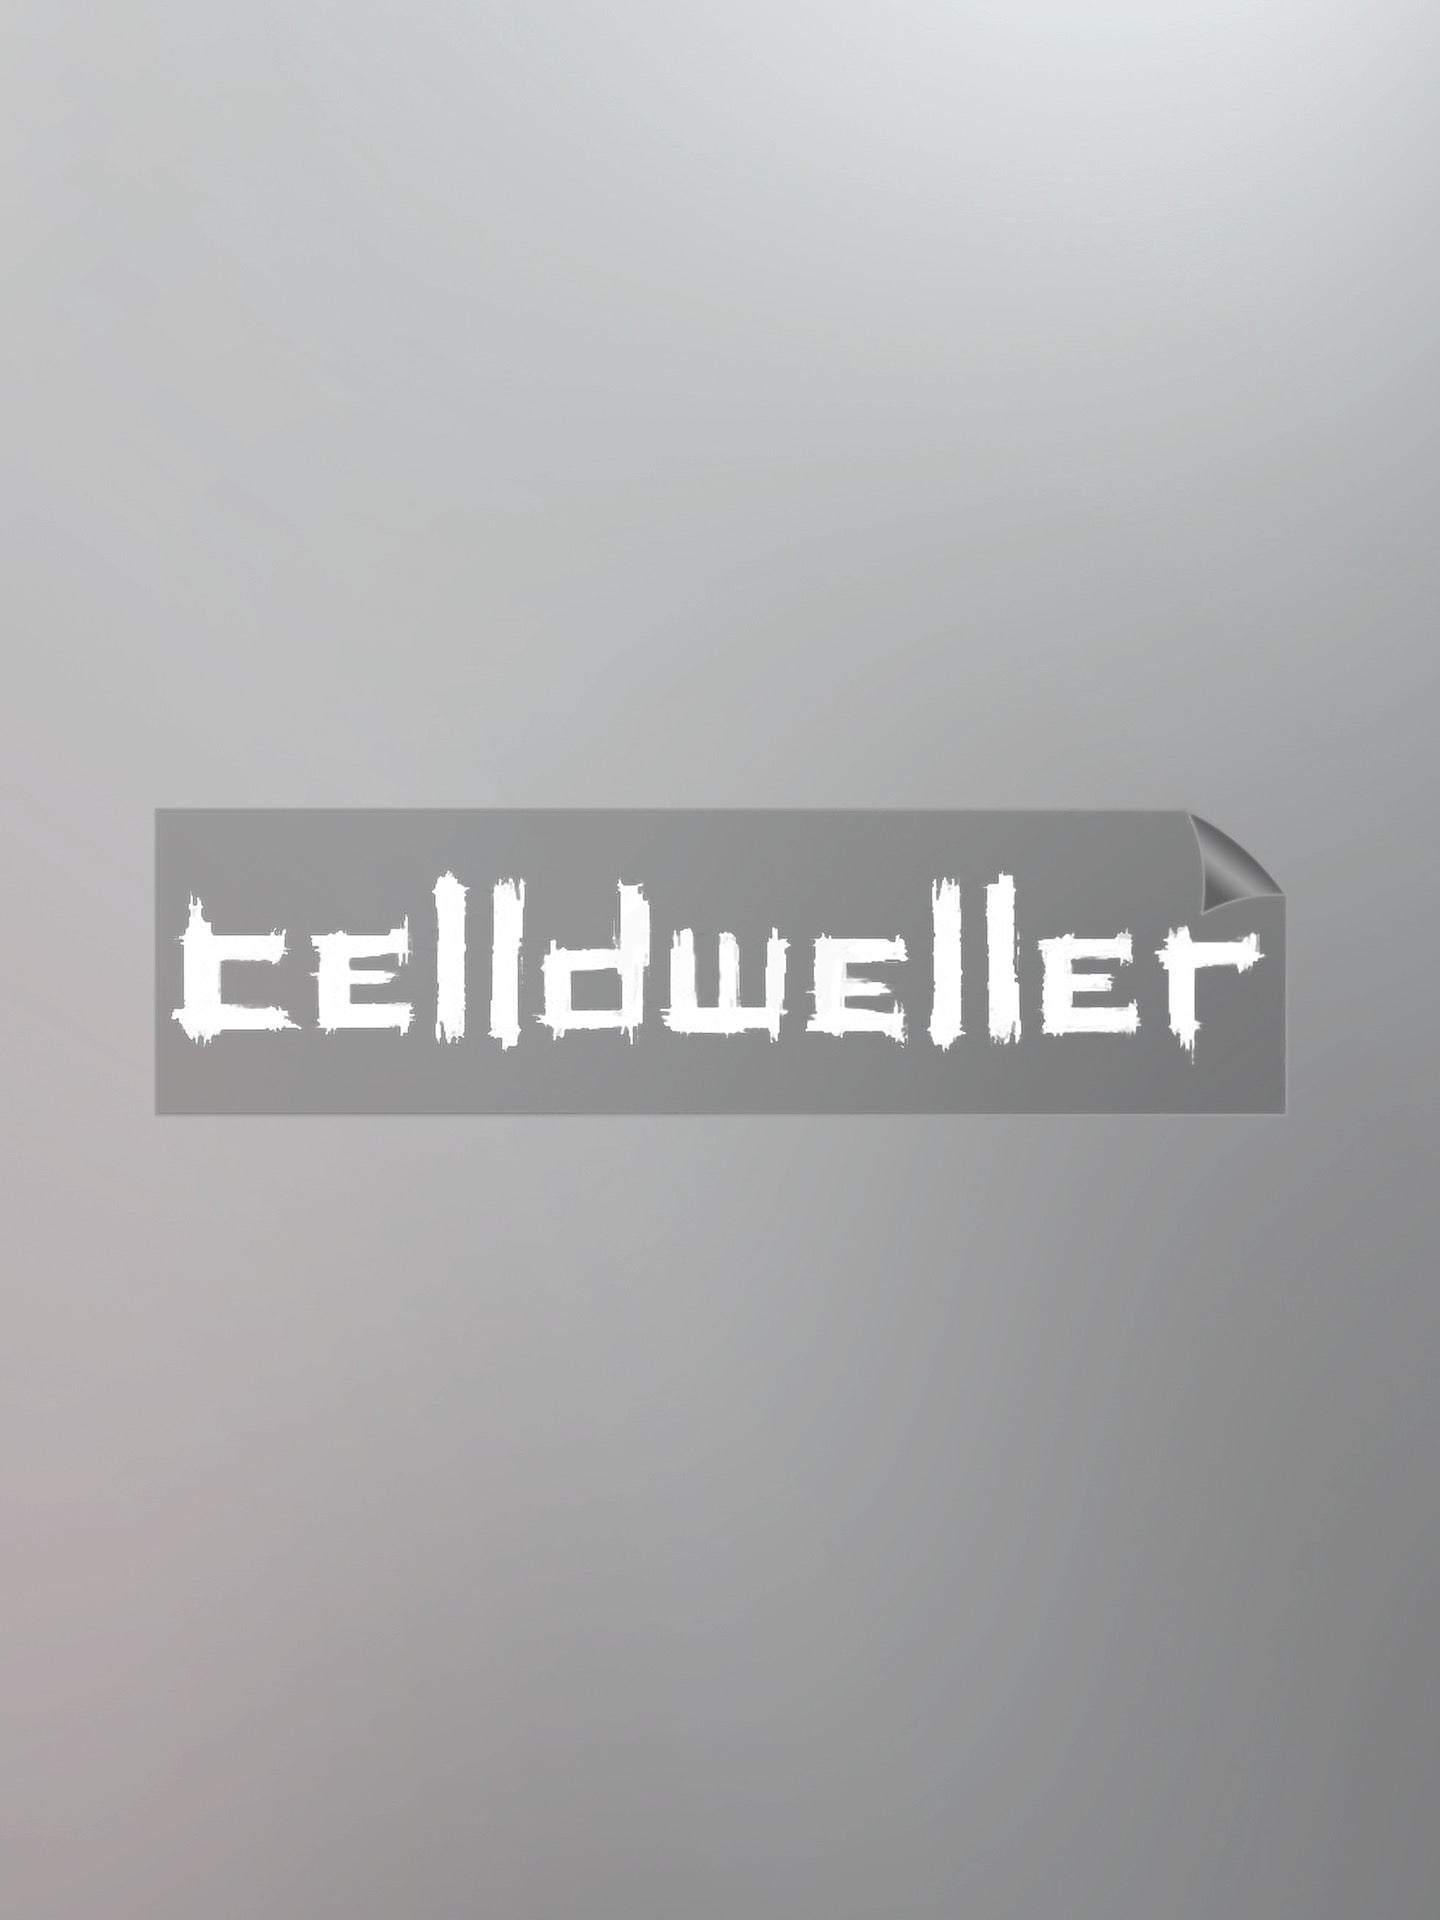 Celldweller - Logo Window Decal Static-Cling